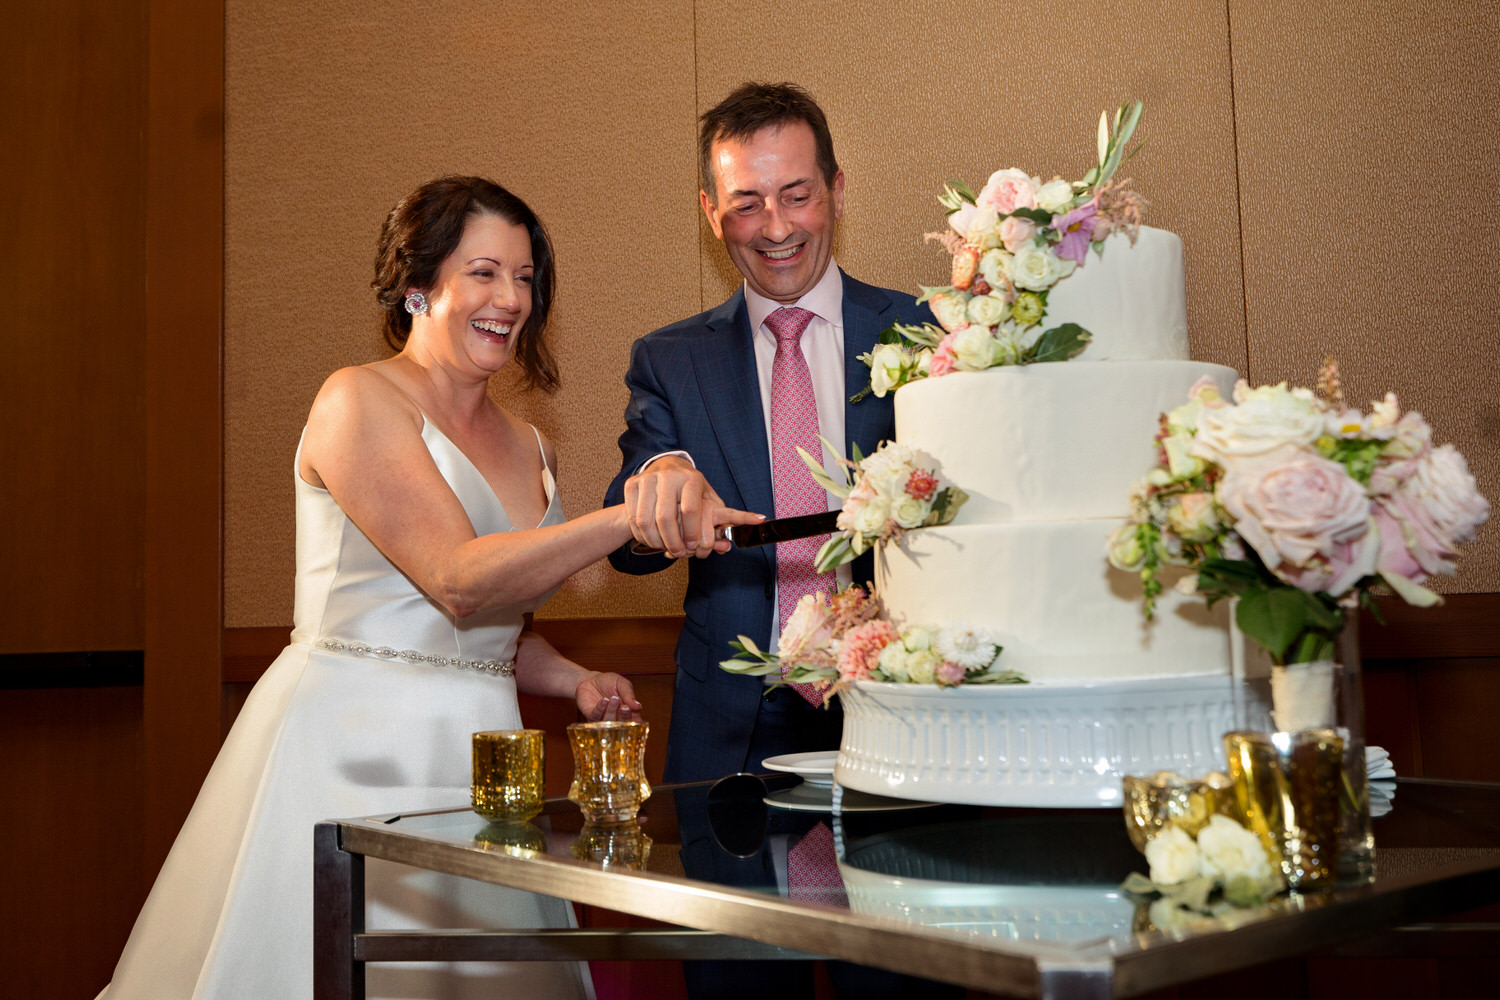 A bride and groom cut their wedding cake in the Ritz Carlton Ballroom.